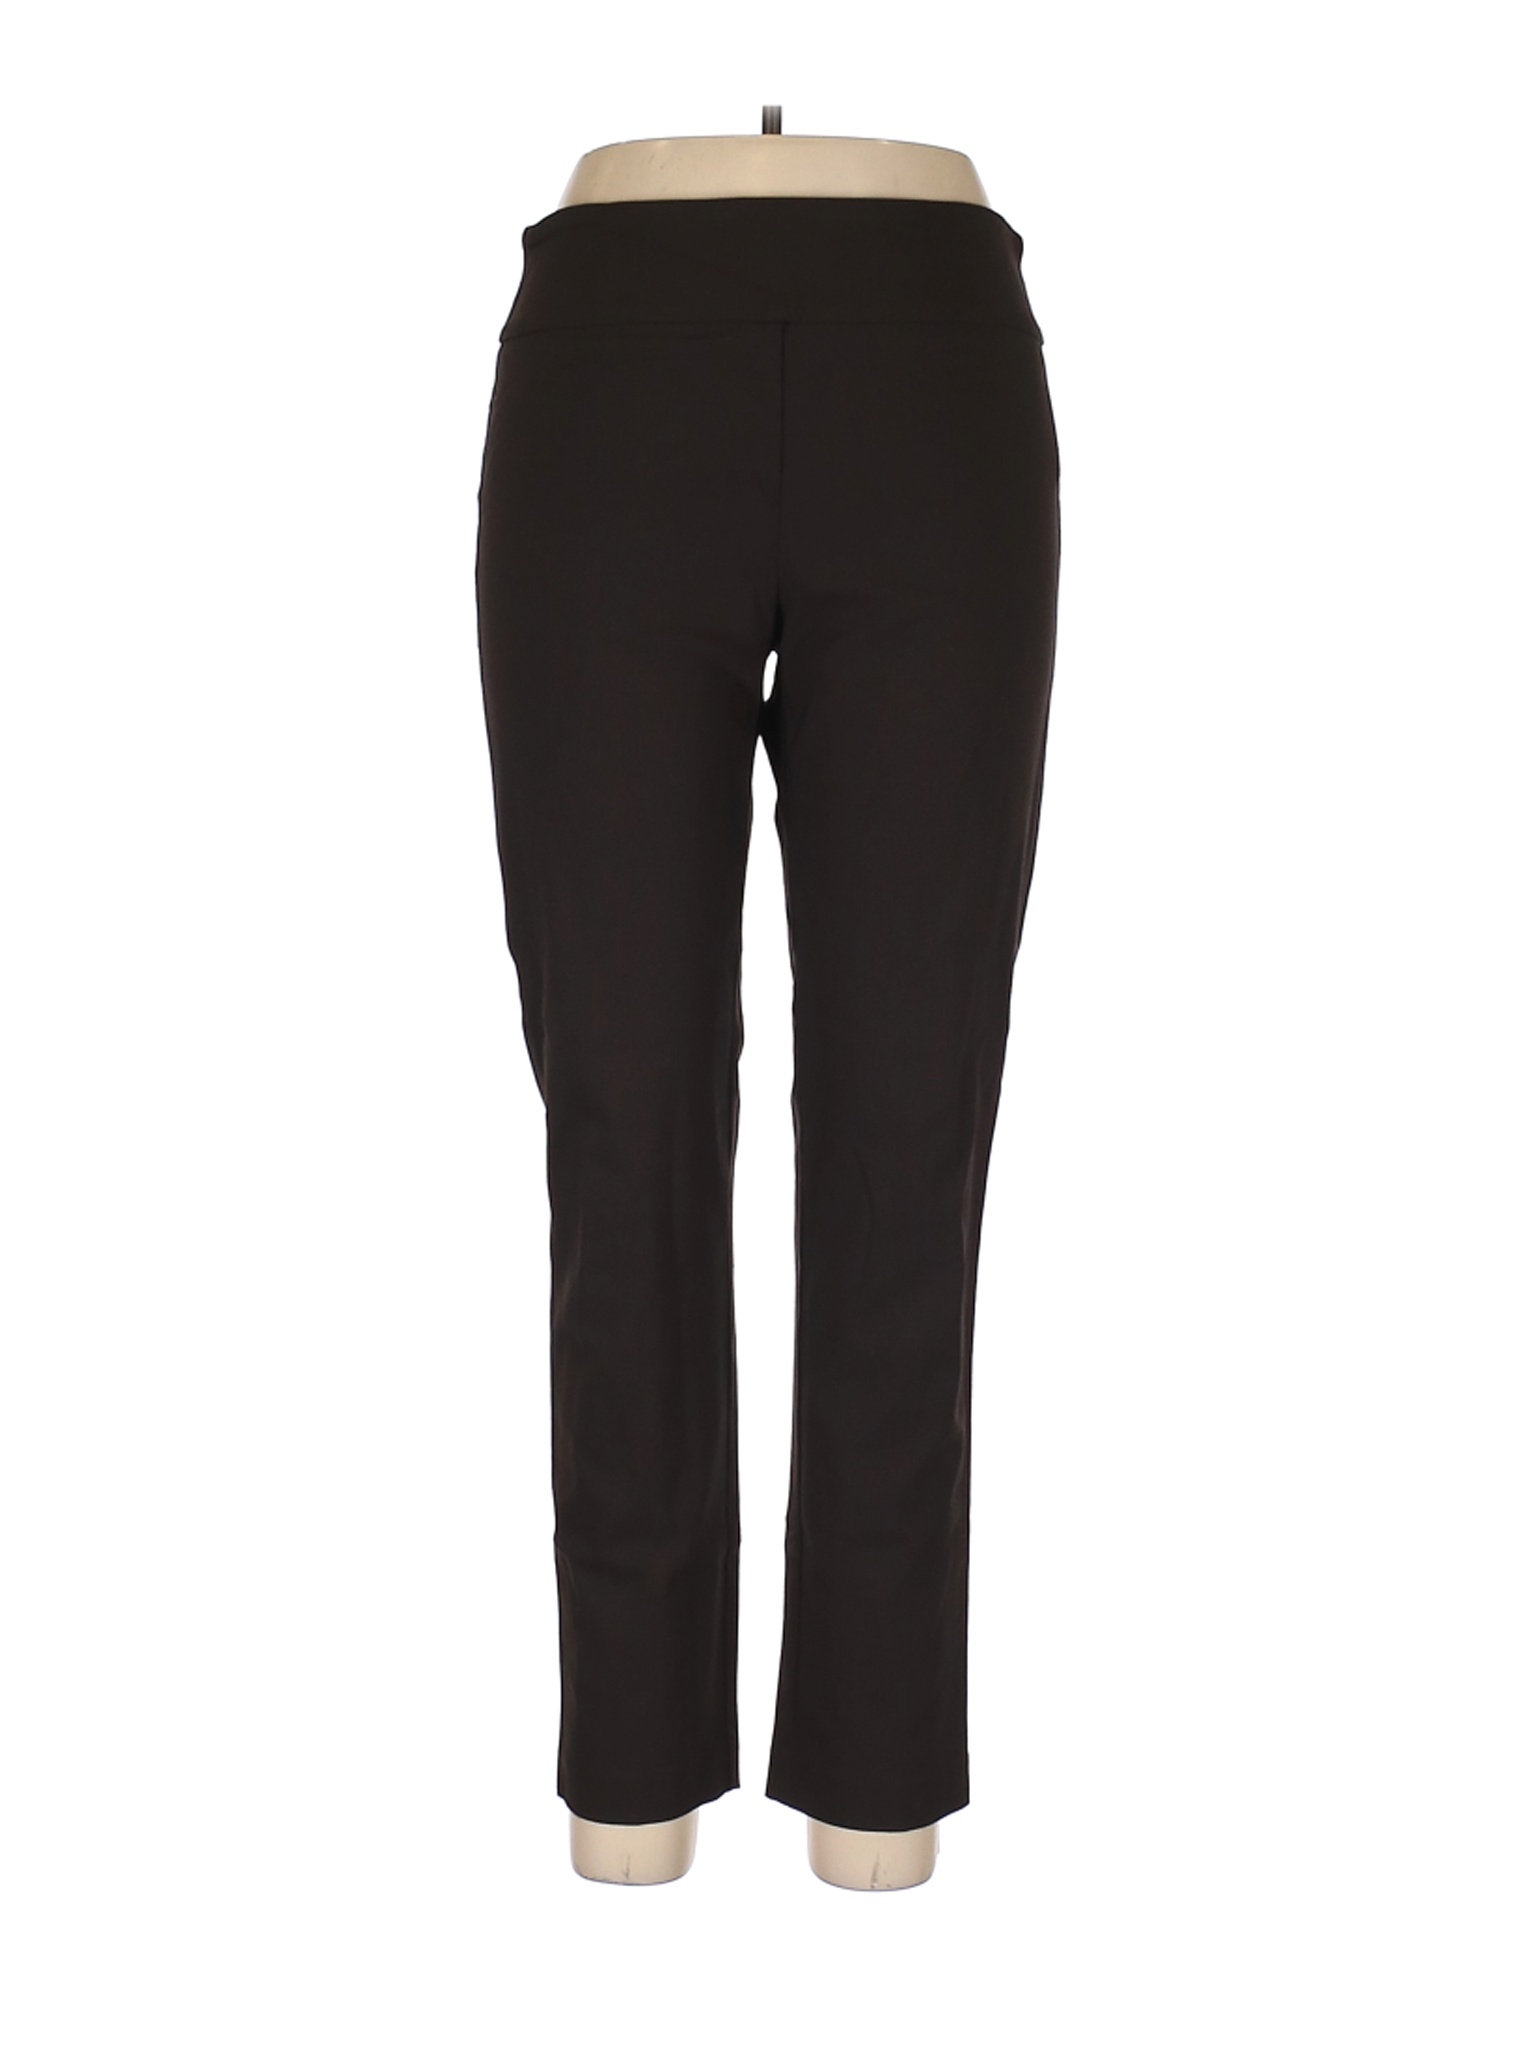 Elliott Lauren Women Black Dress Pants 12 | eBay